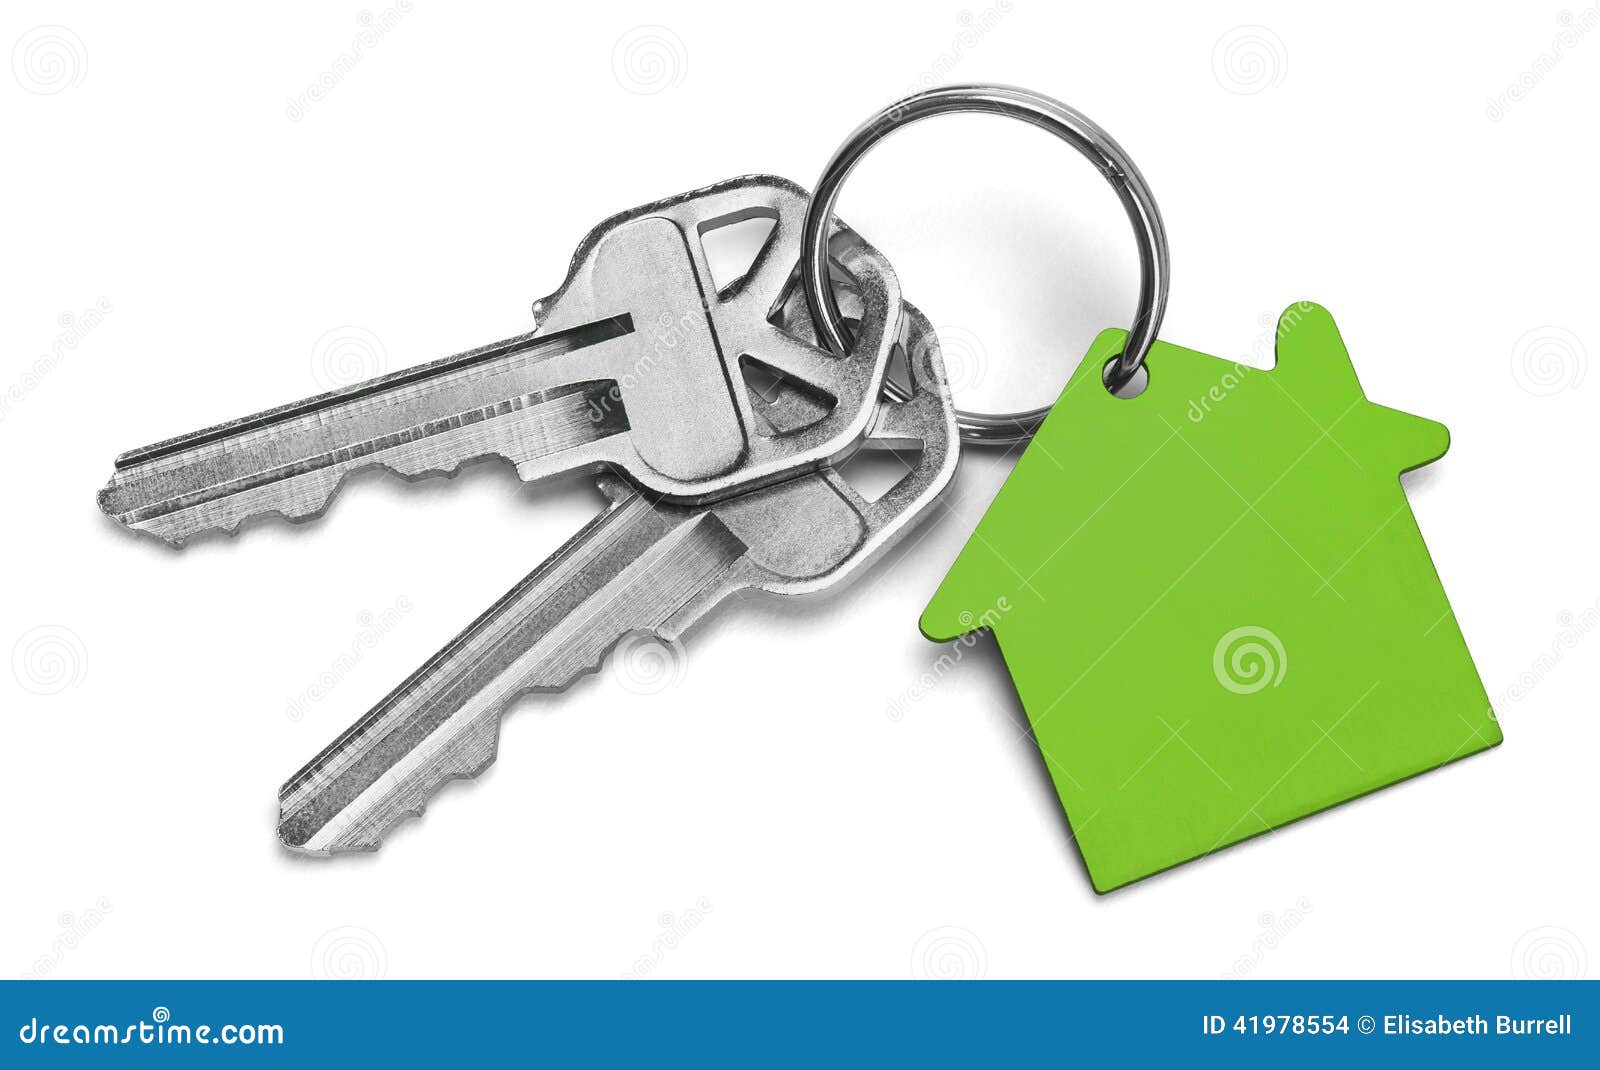 green house keys